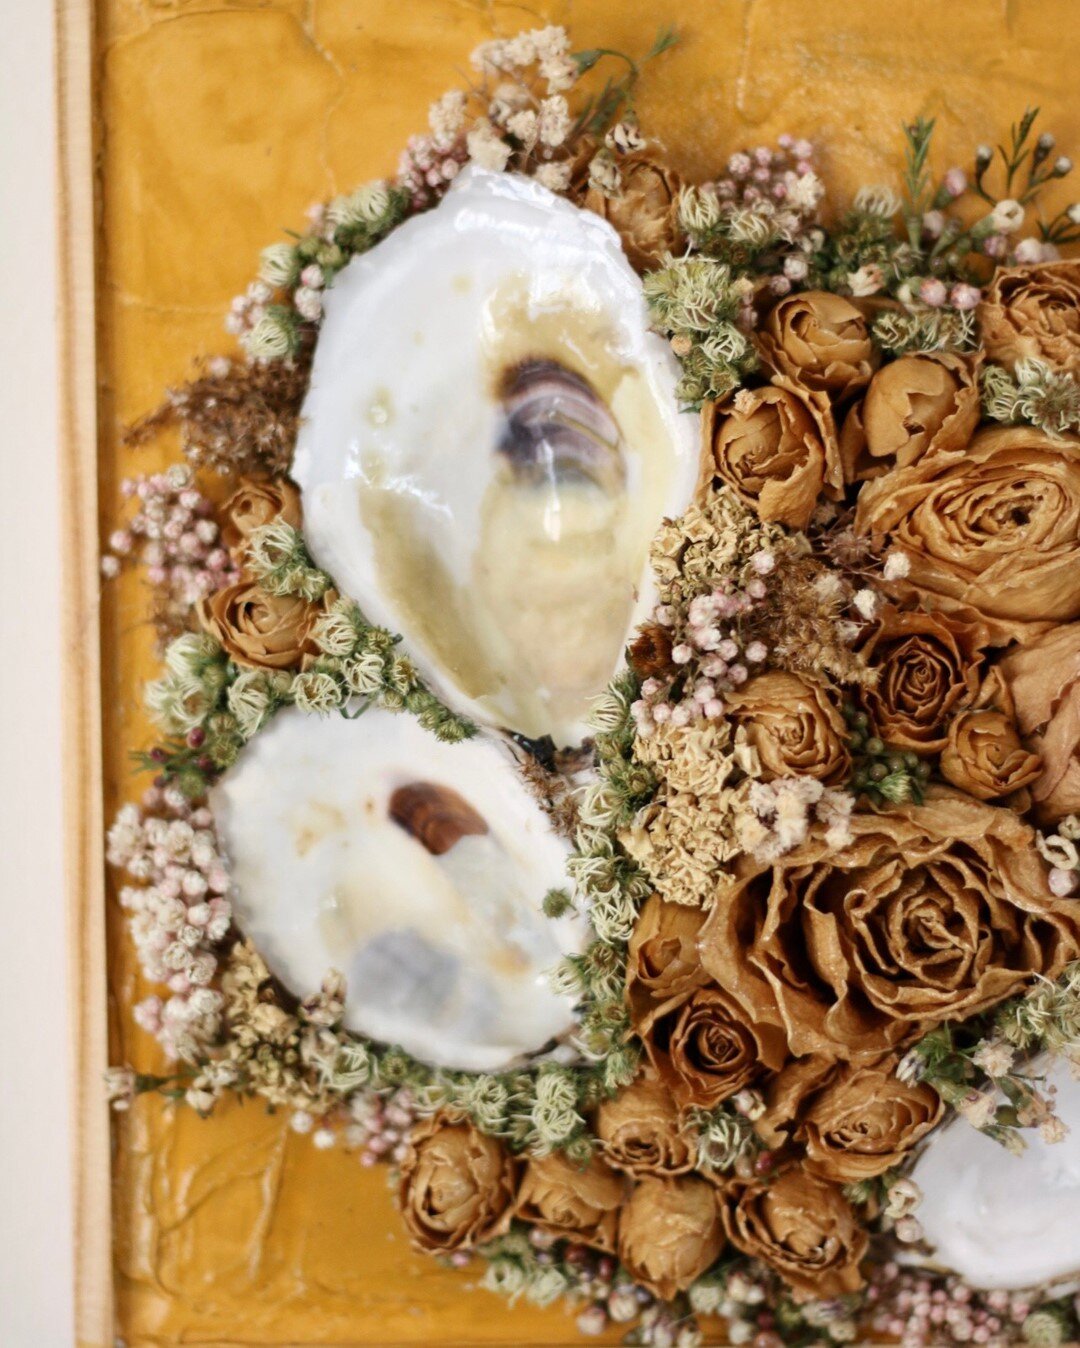 Beautiful Thinking | $475⠀⠀⠀⠀⠀⠀⠀⠀⠀
10x10 Mixed Media⠀⠀⠀⠀⠀⠀⠀⠀⠀
.⠀⠀⠀⠀⠀⠀⠀⠀⠀
.⠀⠀⠀⠀⠀⠀⠀⠀⠀
.⠀⠀⠀⠀⠀⠀⠀⠀⠀
.⠀⠀⠀⠀⠀⠀⠀⠀⠀
.⠀⠀⠀⠀⠀⠀⠀⠀⠀
.⠀⠀⠀⠀⠀⠀⠀⠀⠀
.⠀⠀⠀⠀⠀⠀⠀⠀⠀
.⠀⠀⠀⠀⠀⠀⠀⠀⠀
.⠀⠀⠀⠀⠀⠀⠀⠀⠀
#driedflowers #driedflorals #flowerarrangements #arrangements #oystershell #mustard #yell